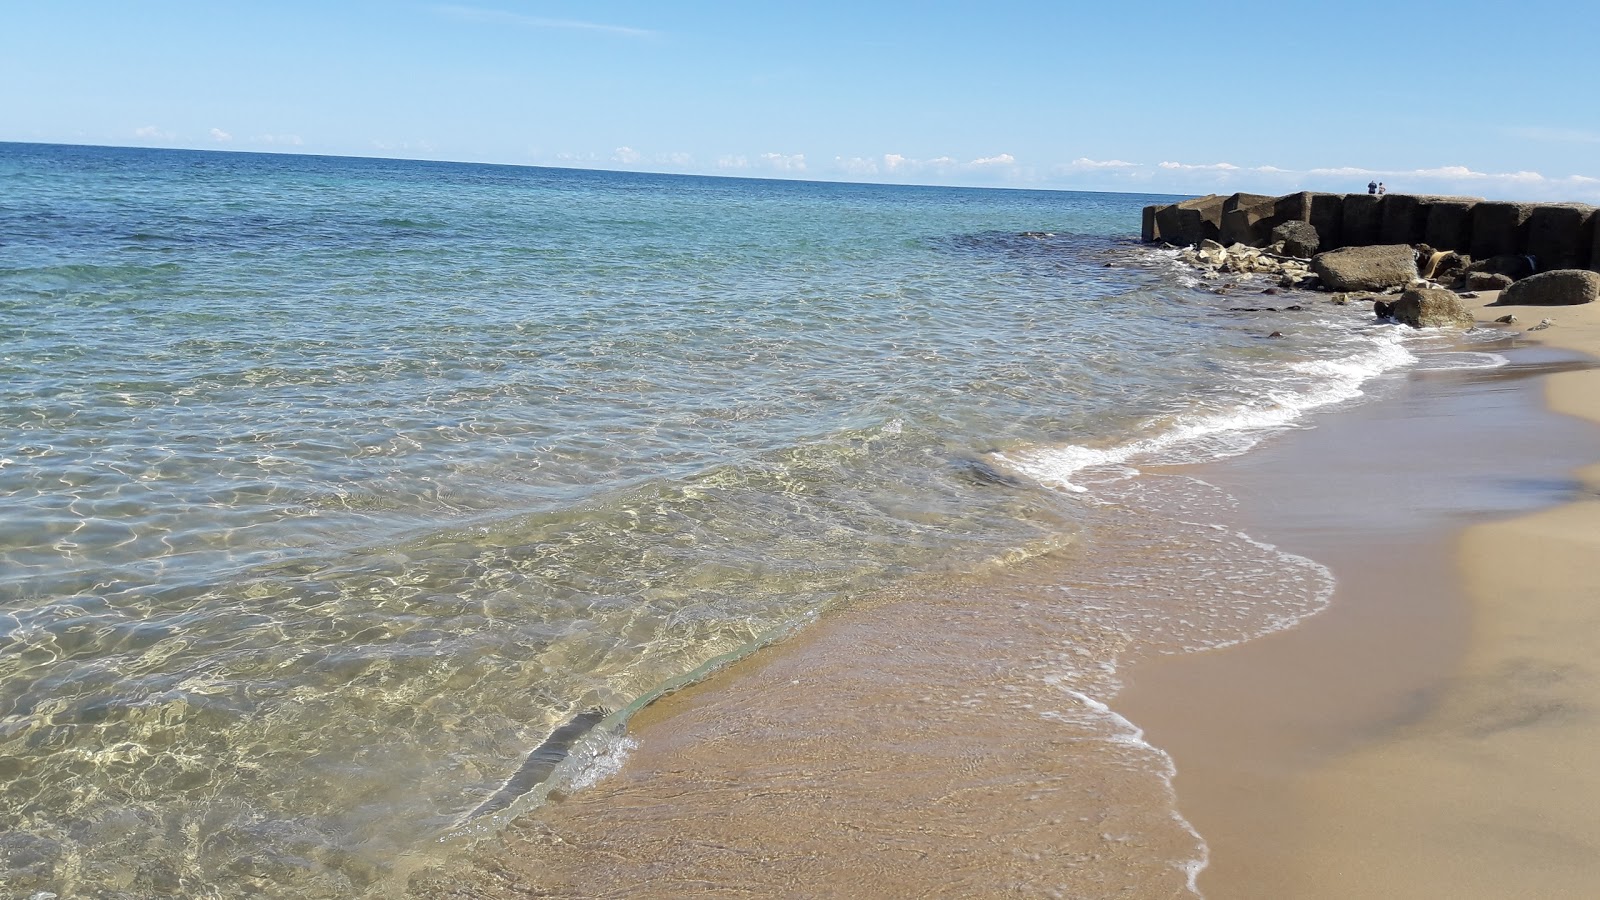 Spiaggia di Sciaia II'in fotoğrafı parlak kum yüzey ile